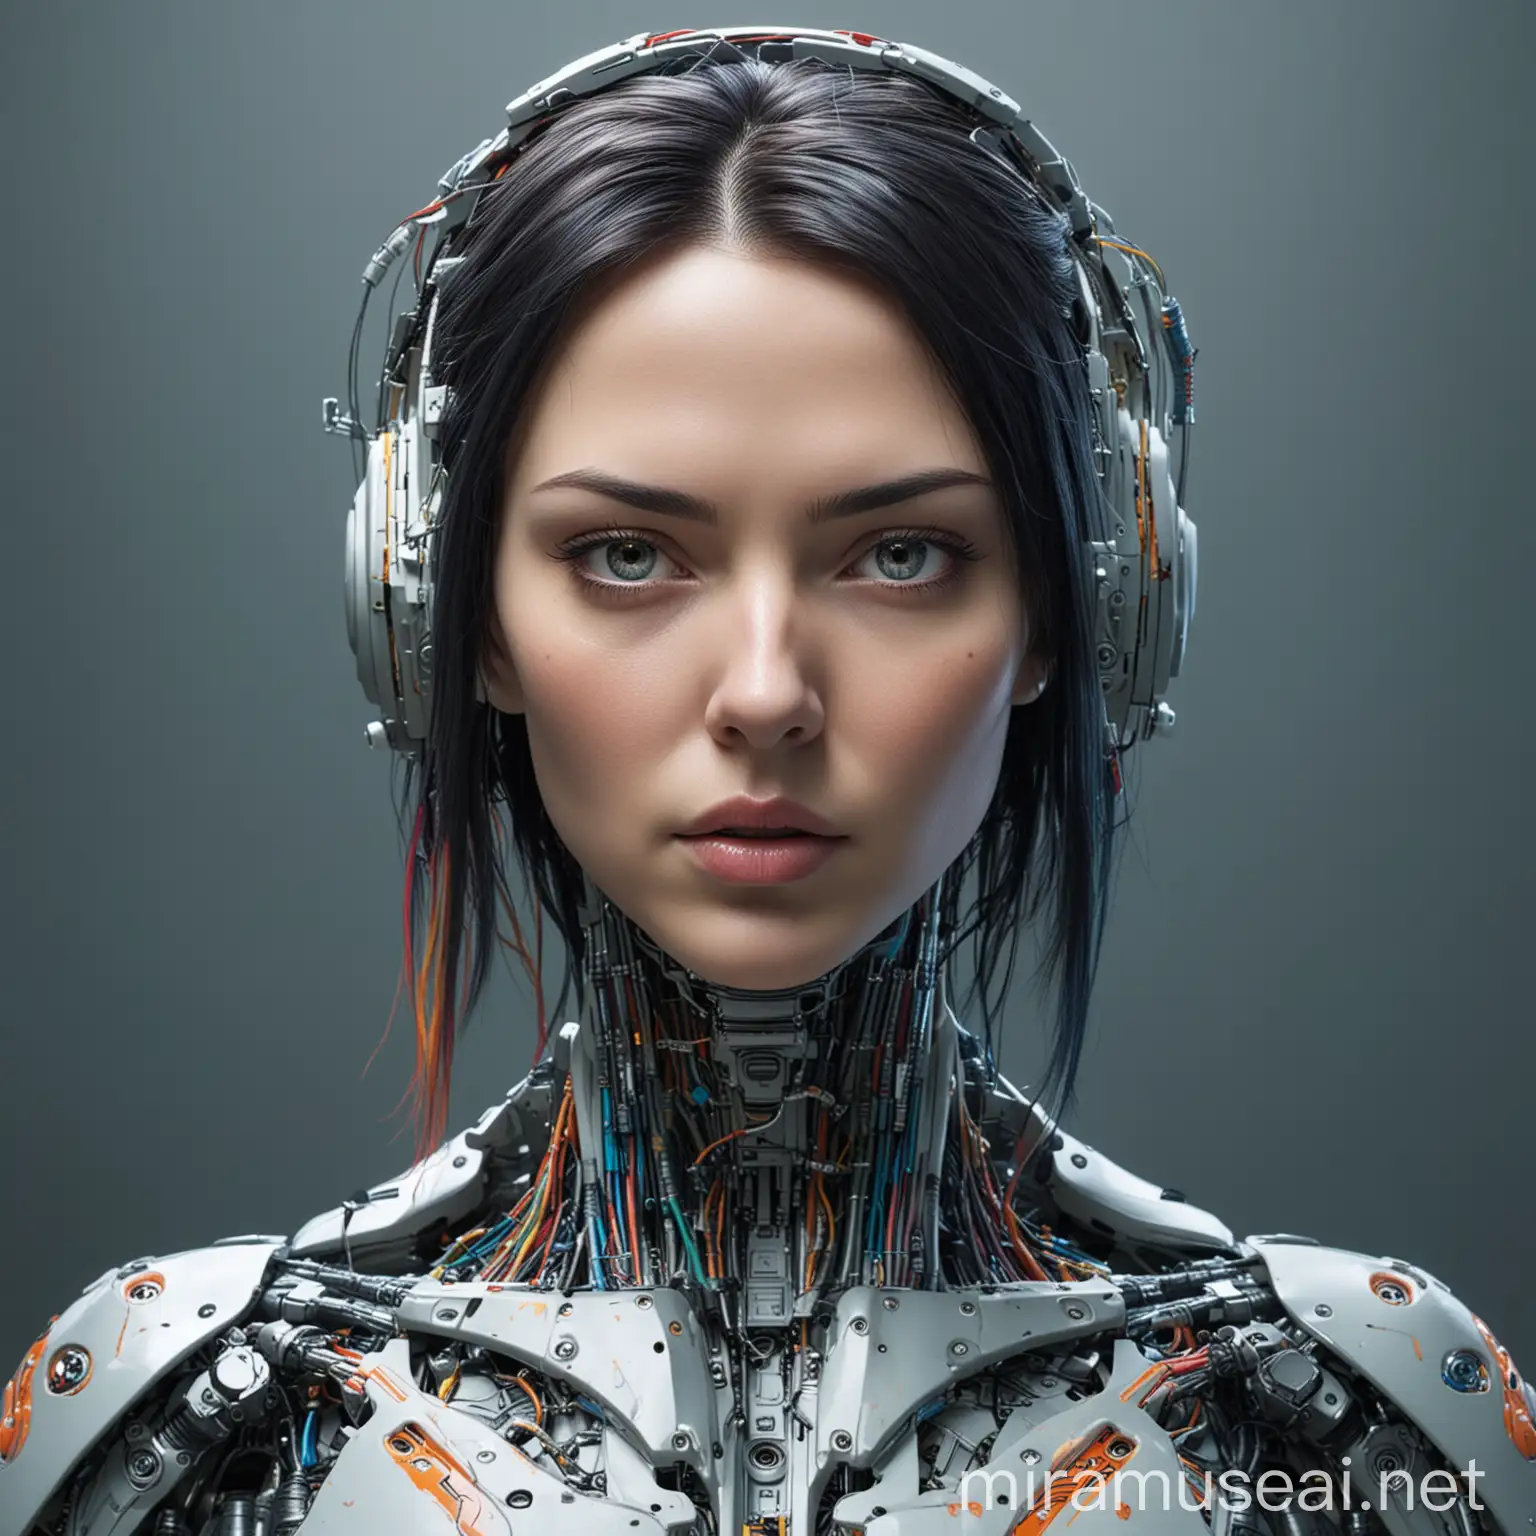 Futuristic Cyborg Woman Portrait in Vibrant Cyberpunk Style